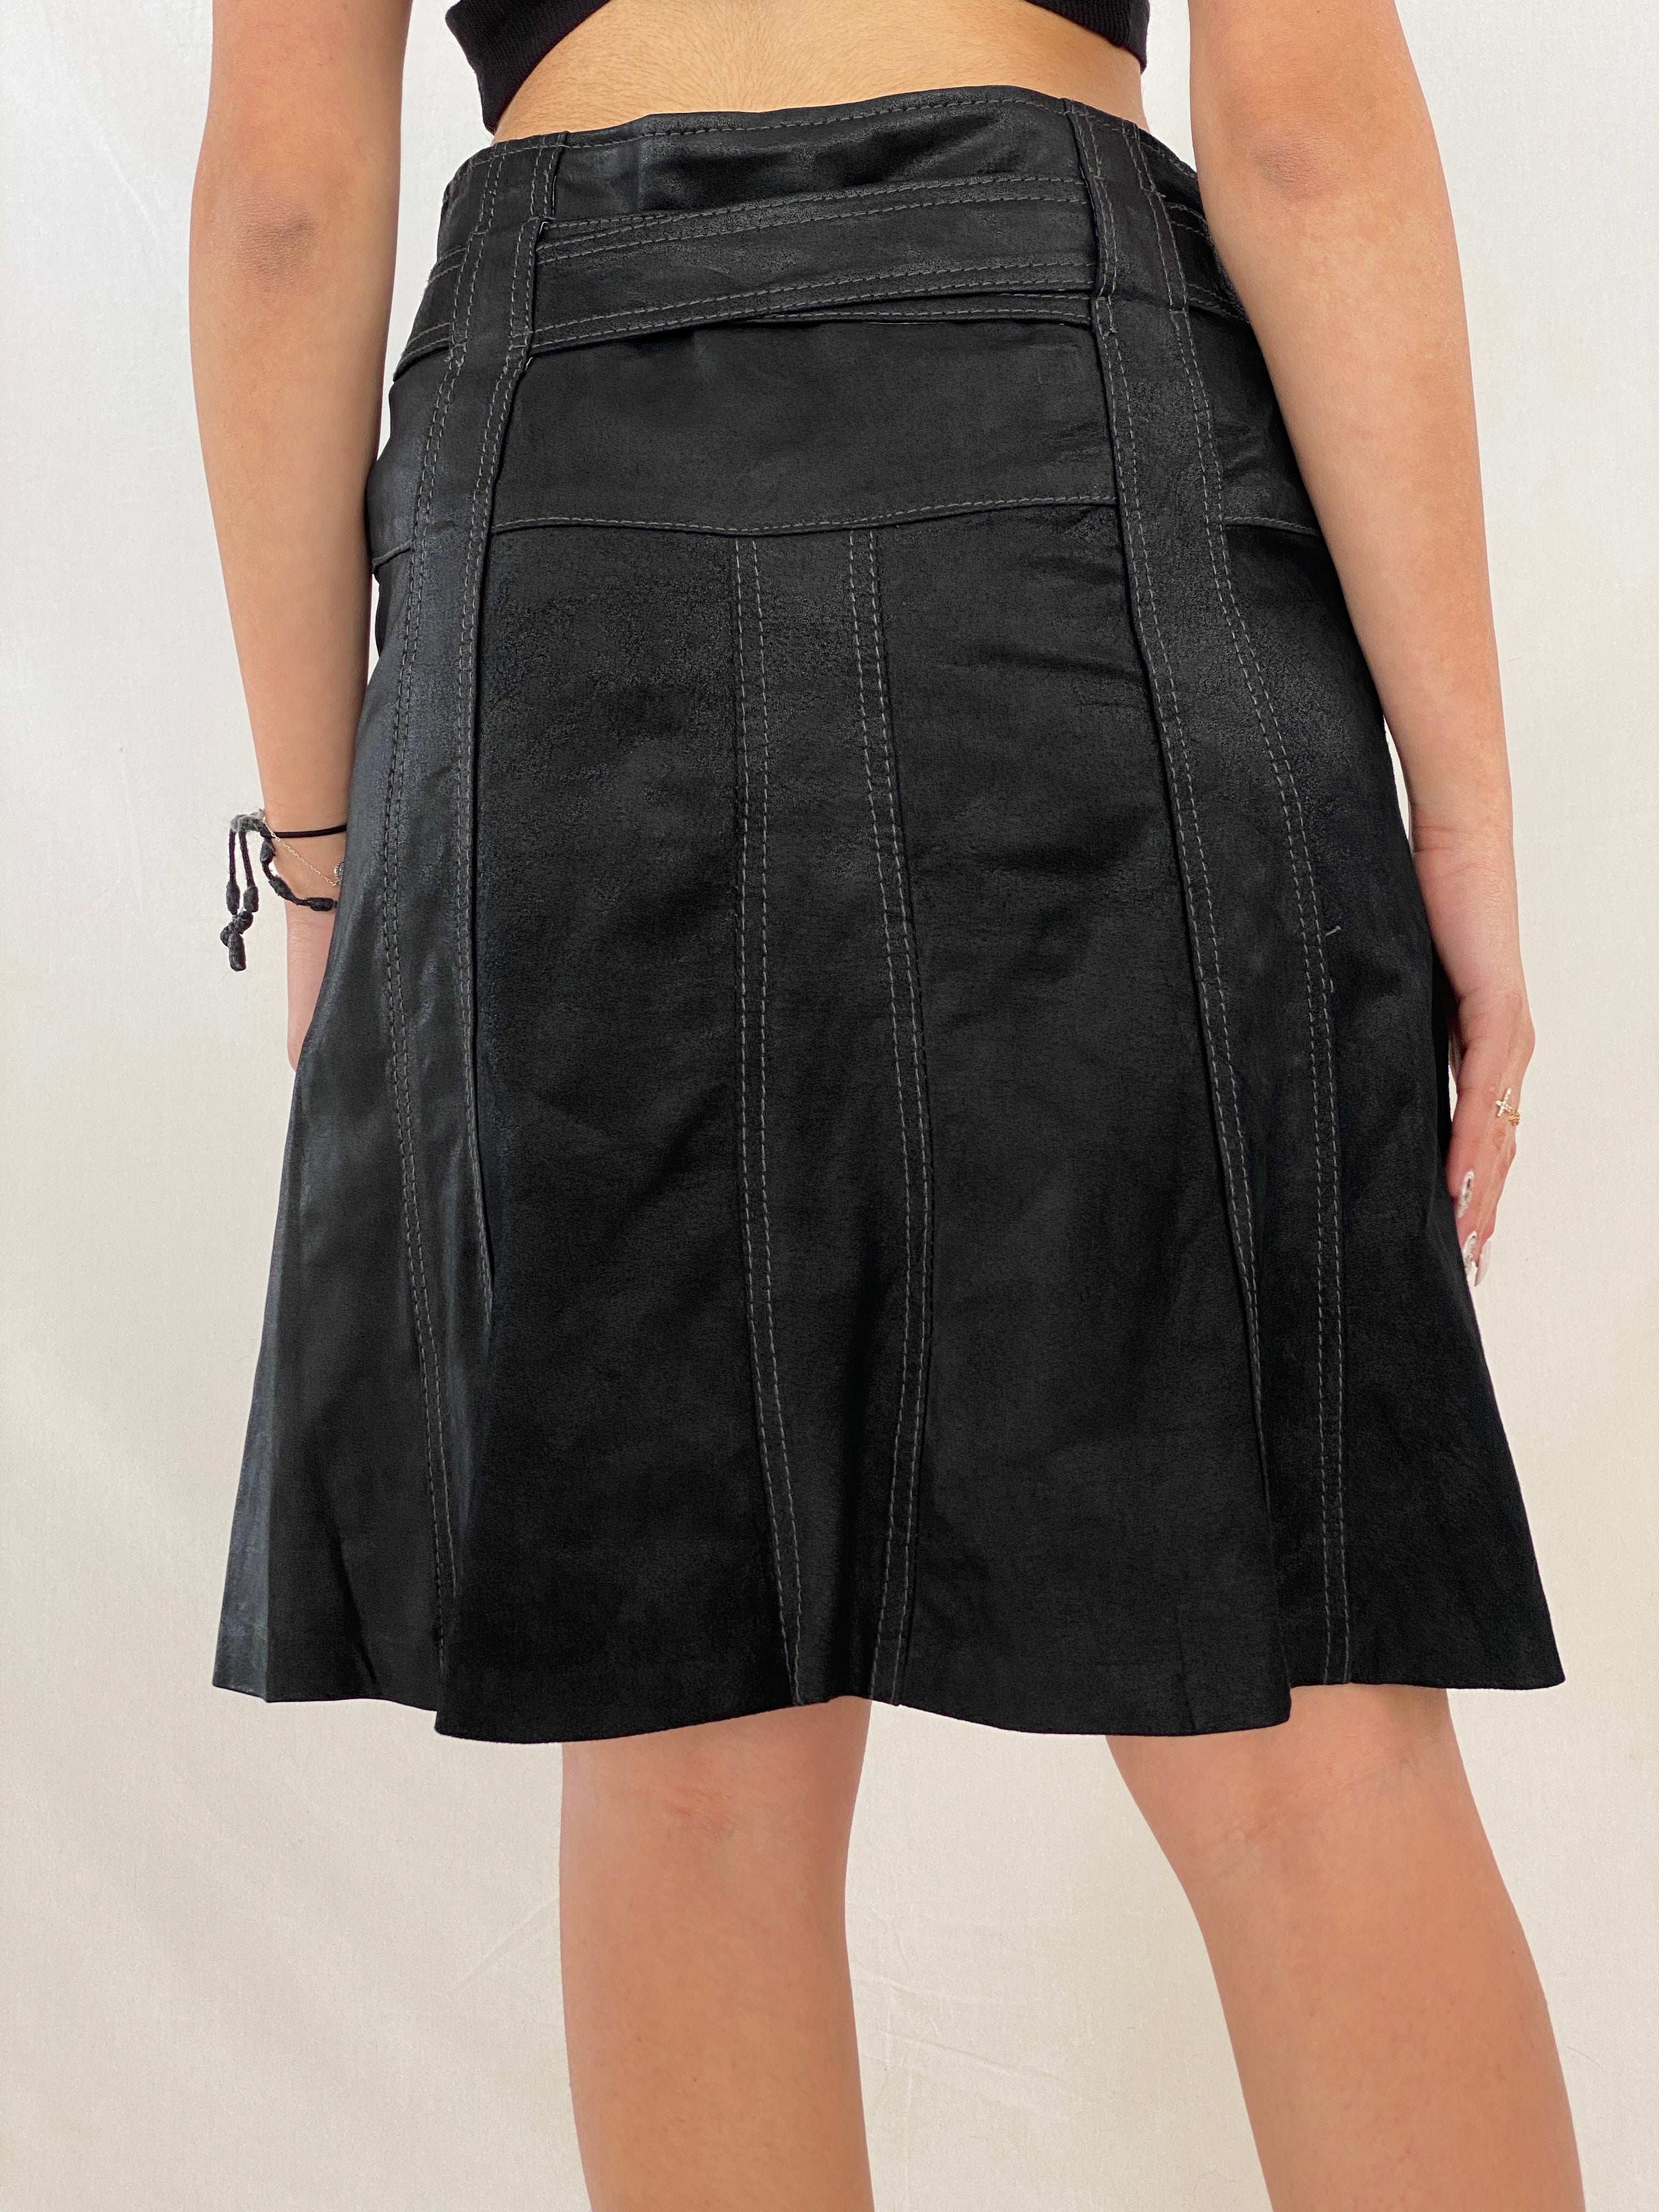 Vintage Arma Genuine Leather Midi Skirt - Balagan Vintage Midi Skirt 90s, genuine leather, Juana, midi skirt, NEW IN